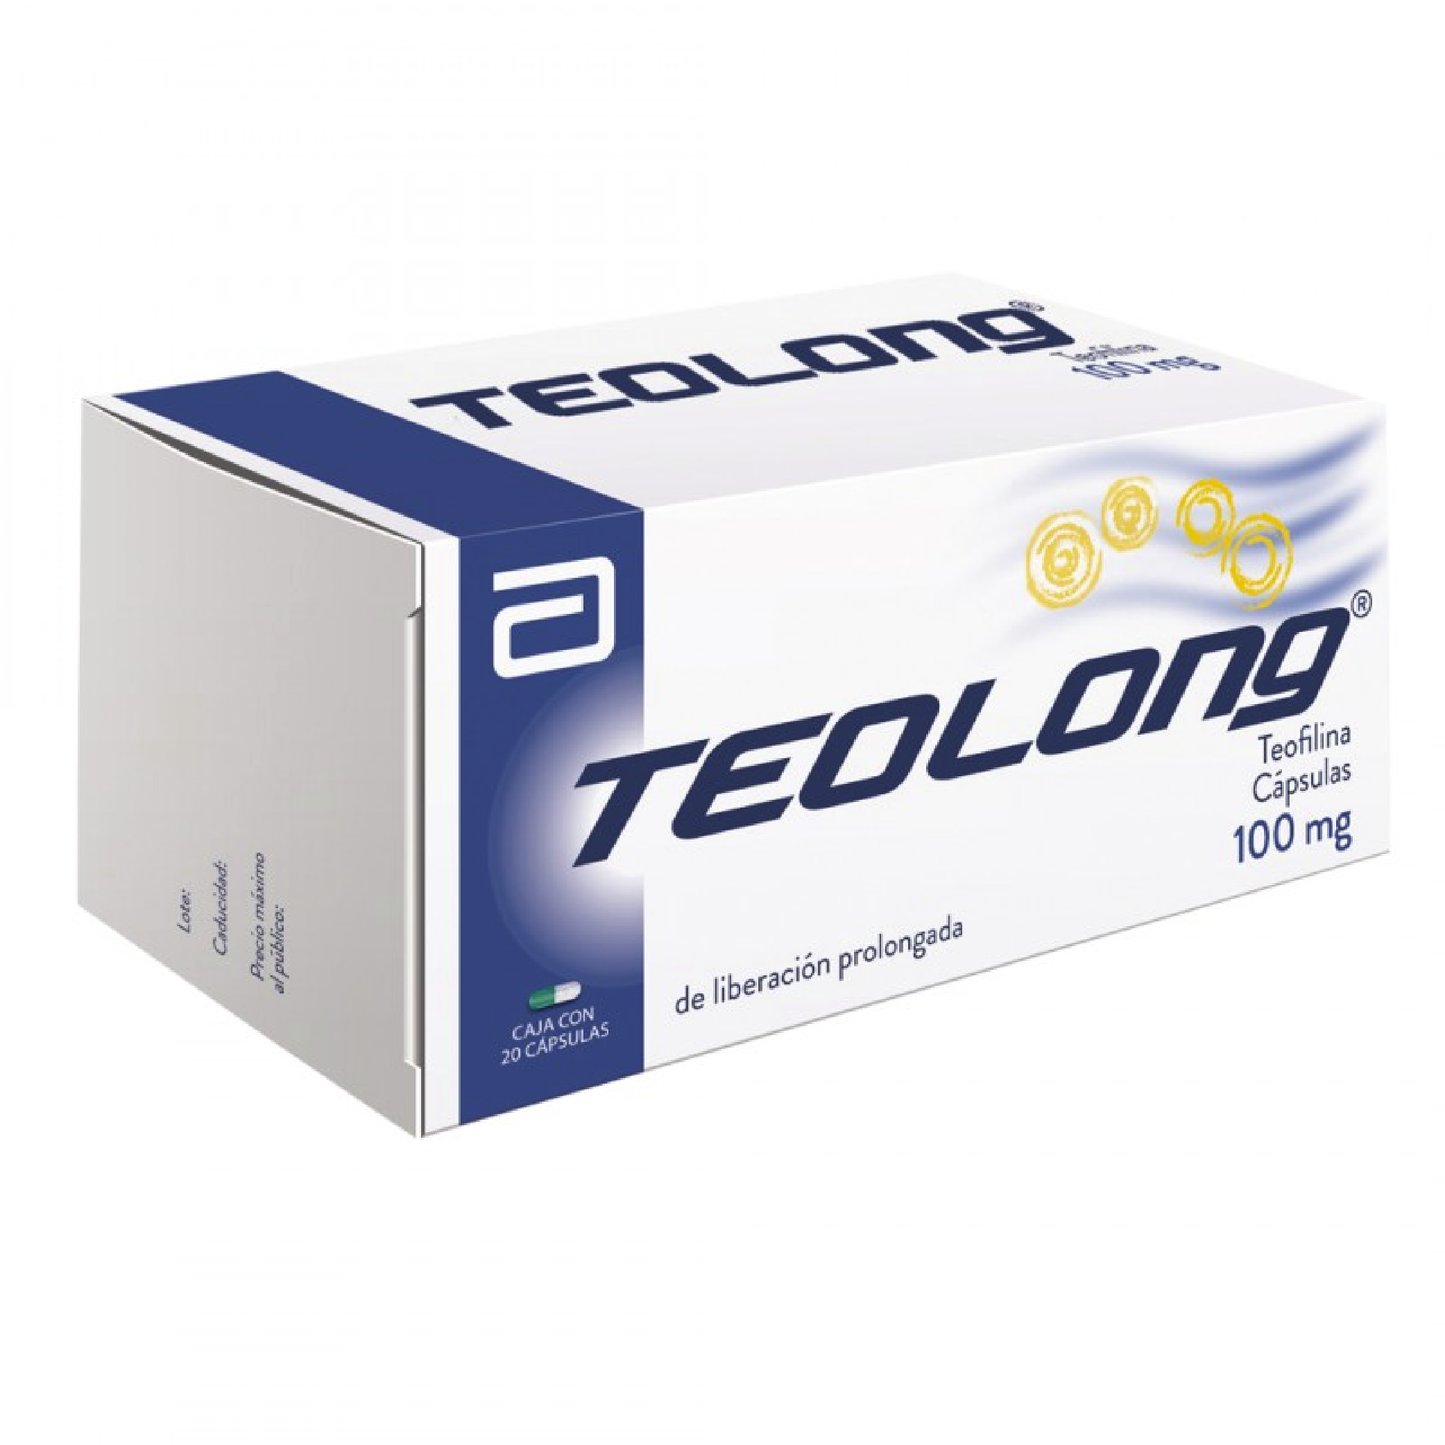 Teolong (Teofilina) Caps 100 mg Cja c 20 caps